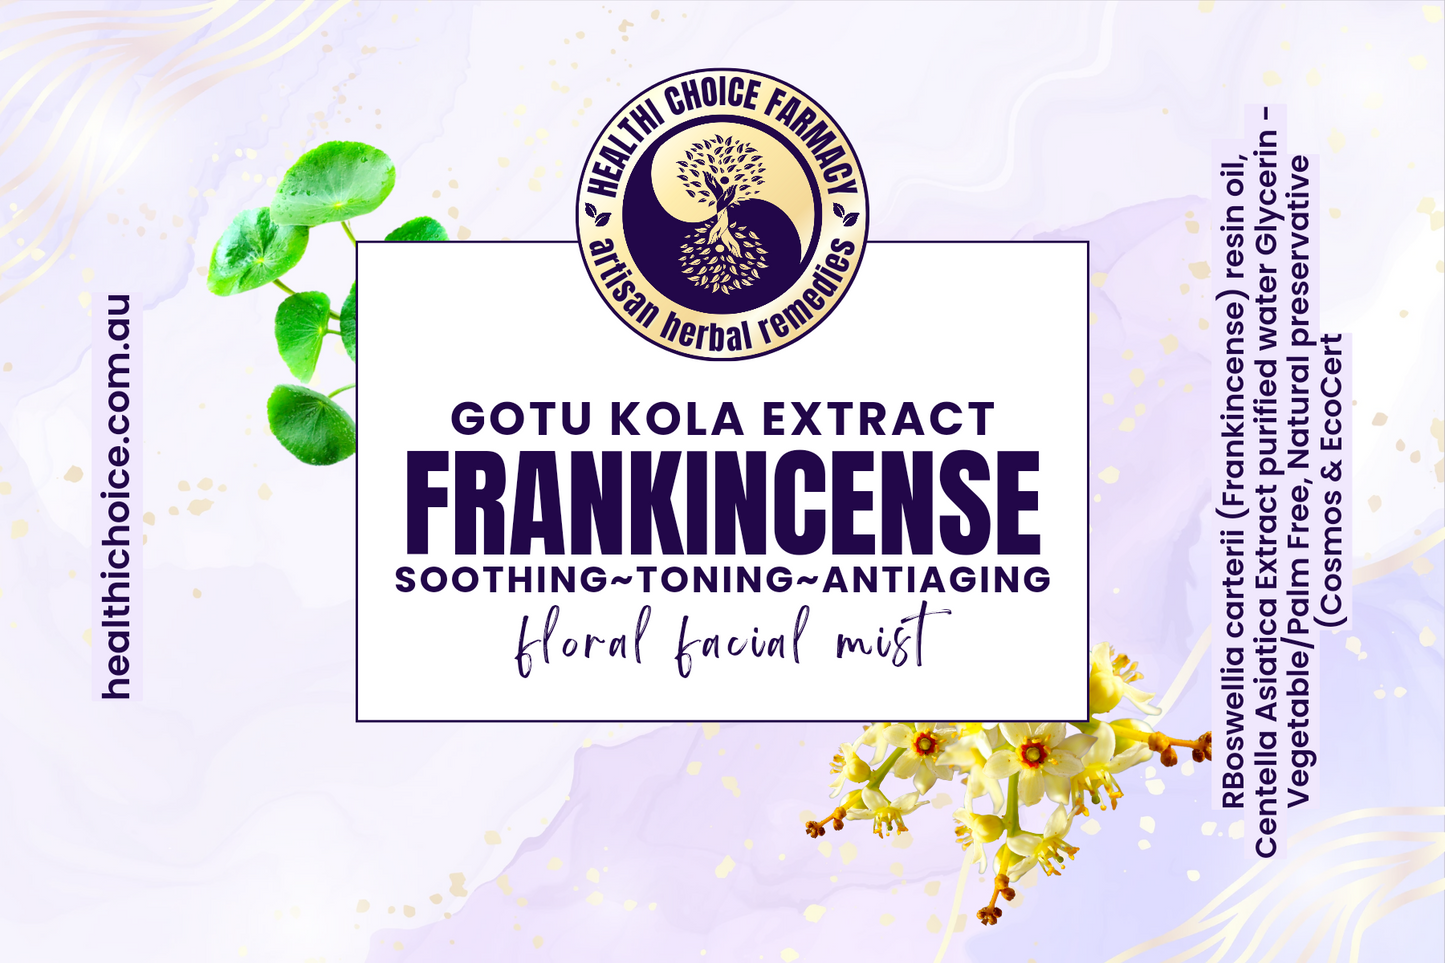 Frankincense Floral Mist with Gotu Kola Extract - Healthi Choice Farmacy 